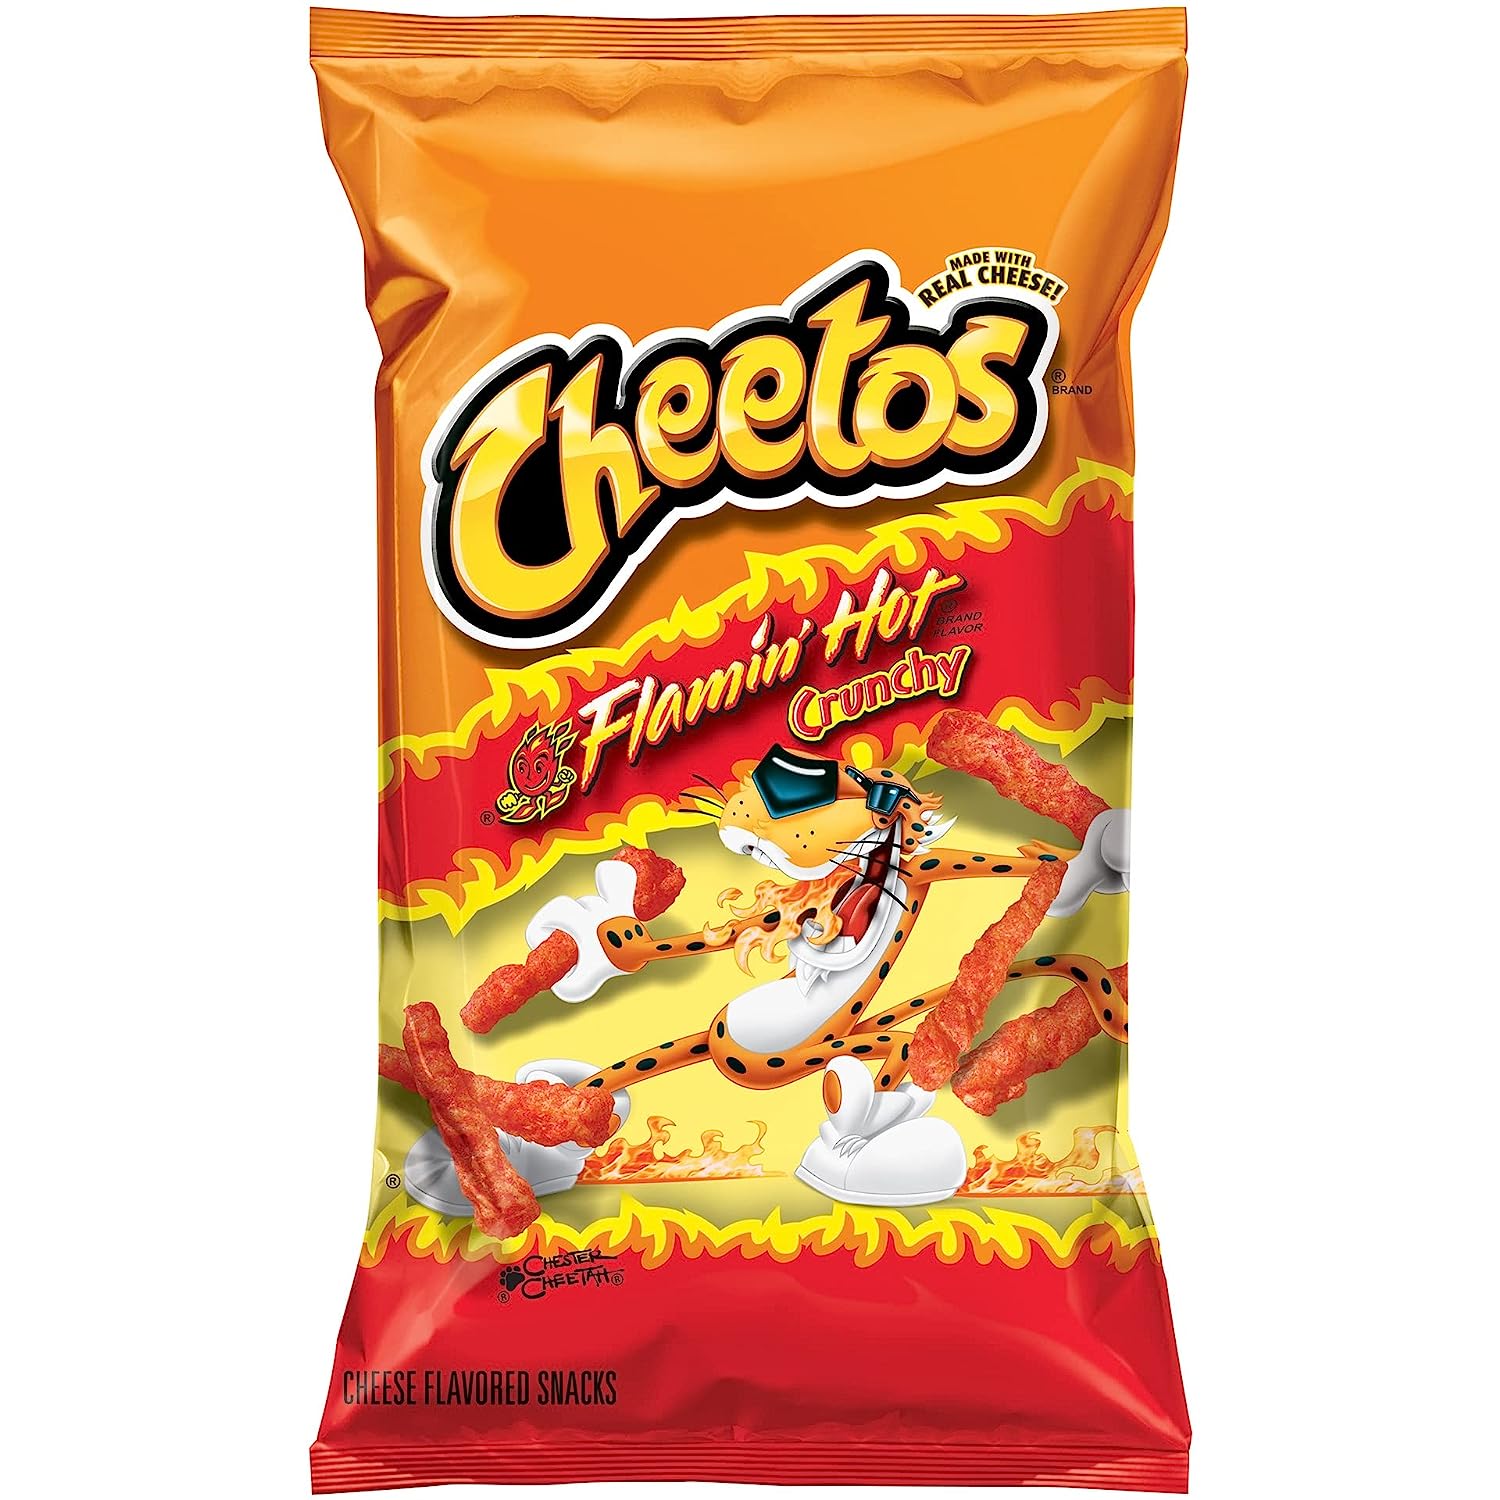 Cheetos Cheetos Flamin' Hot Flavored Pepper Puffs 0.875 oz